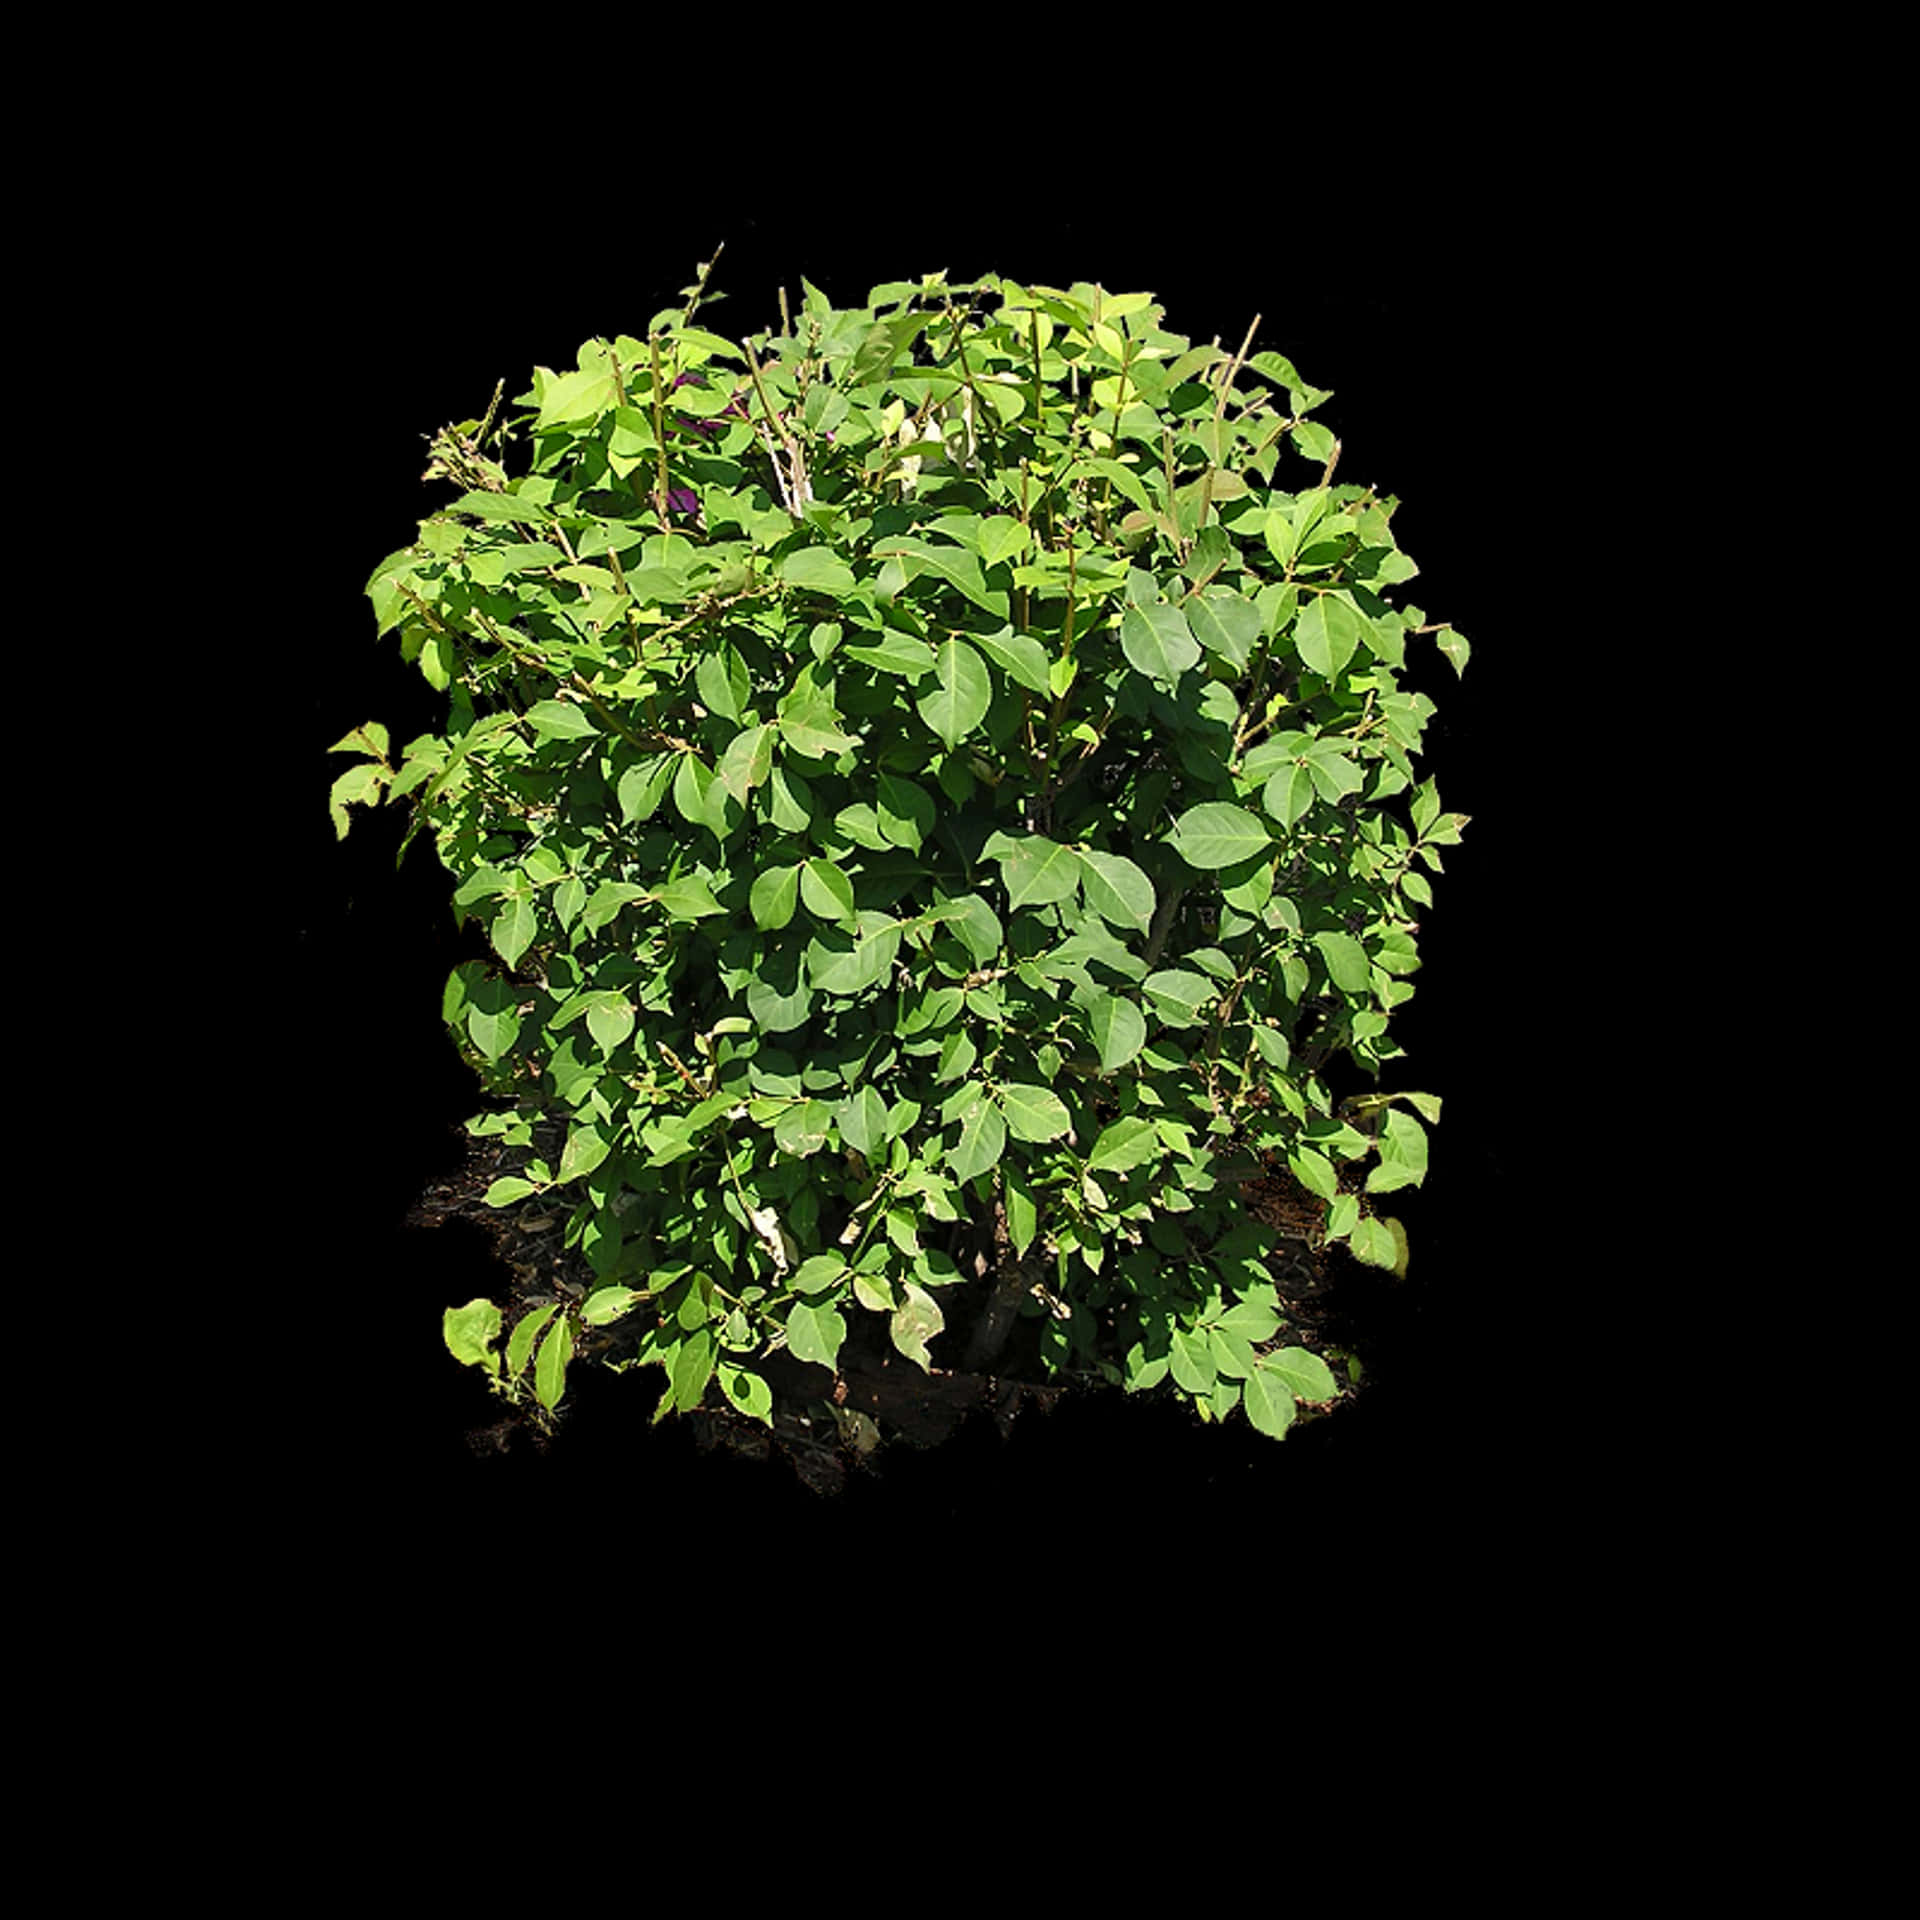 Minimalist Shaggy Green Dendrolobium Bush Background